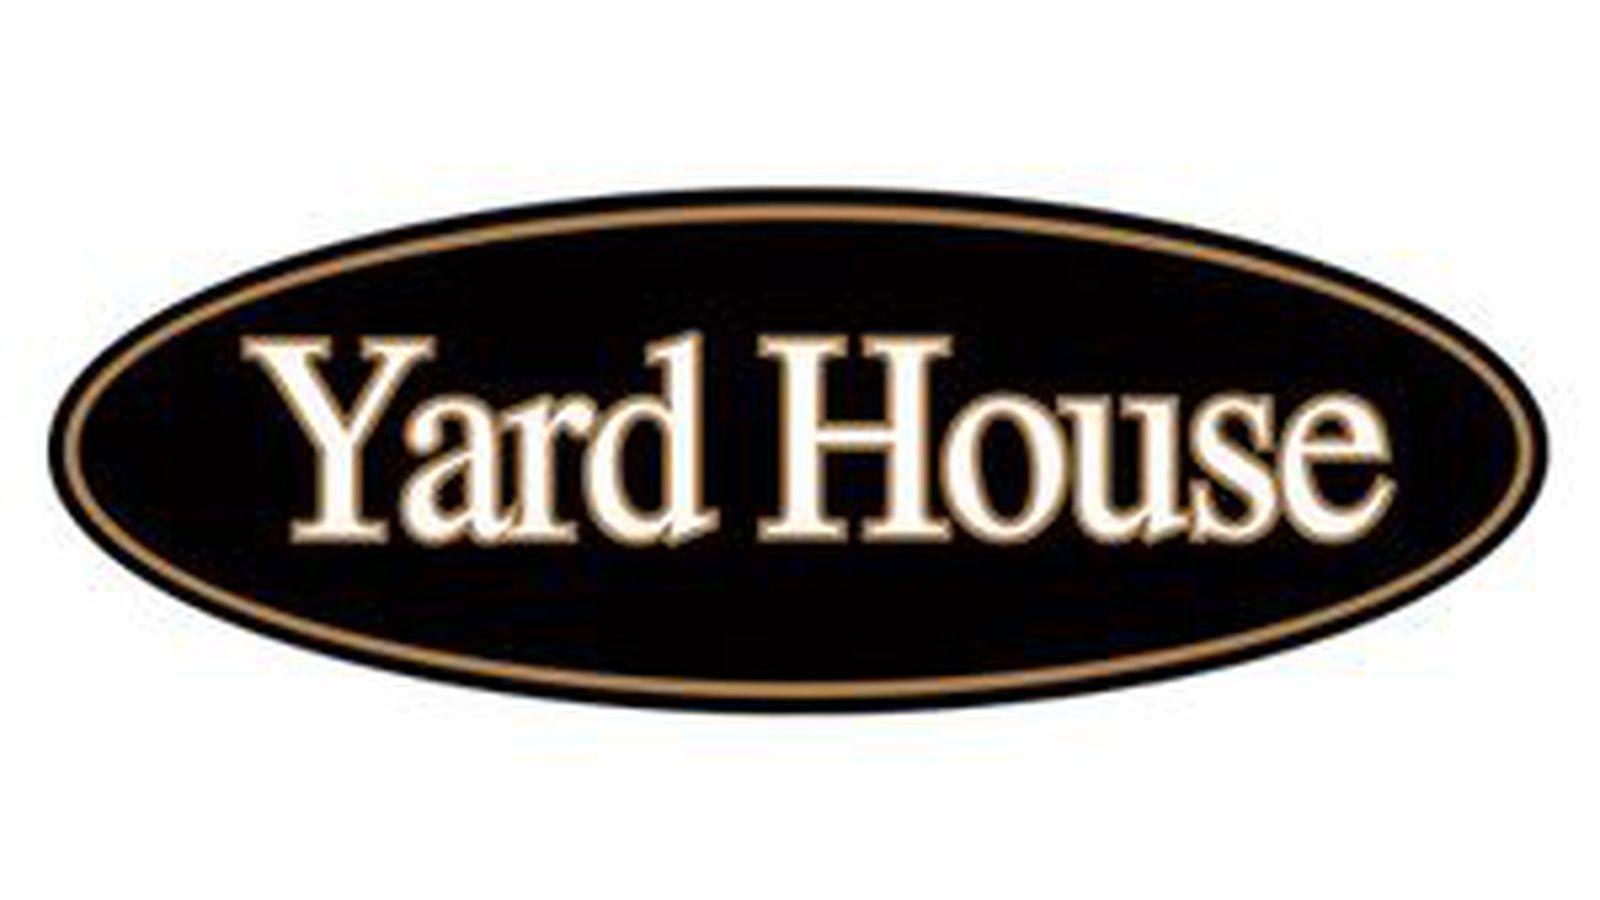 Yard House Logo - Yard house Logos